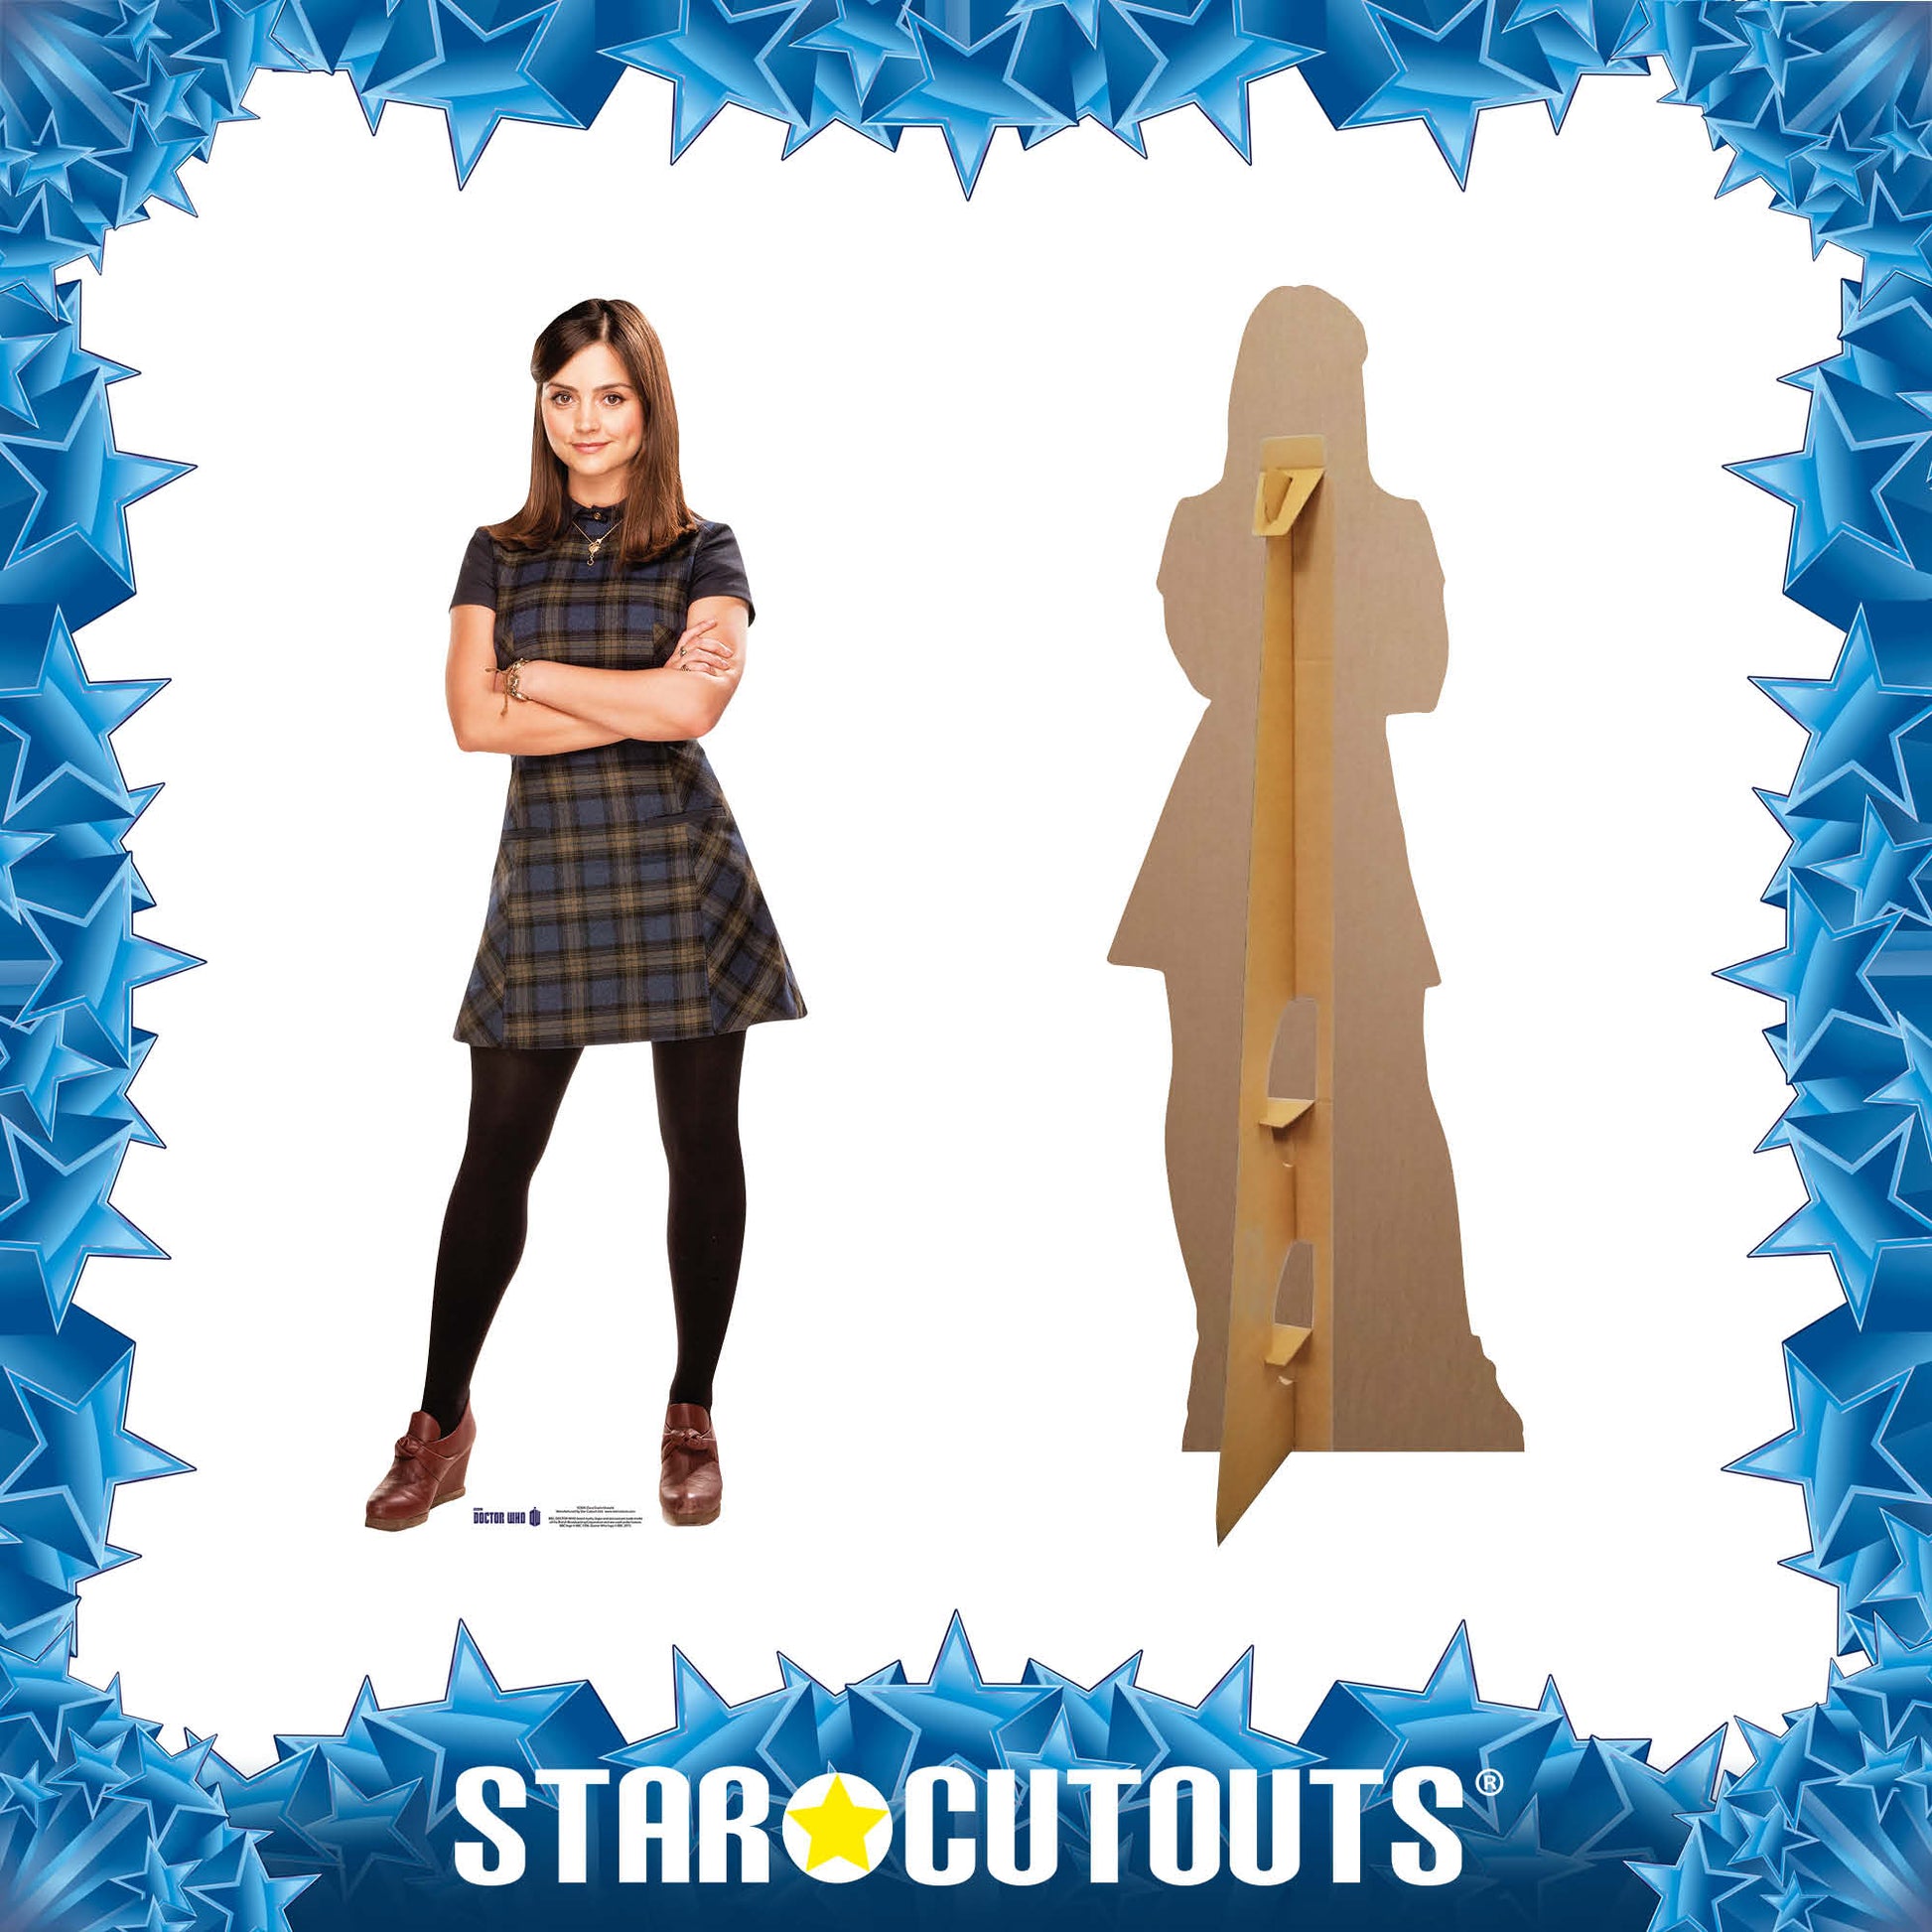 Clara Oswin Oswald Cardboard Cut Out Height 159cm - Star Cutouts